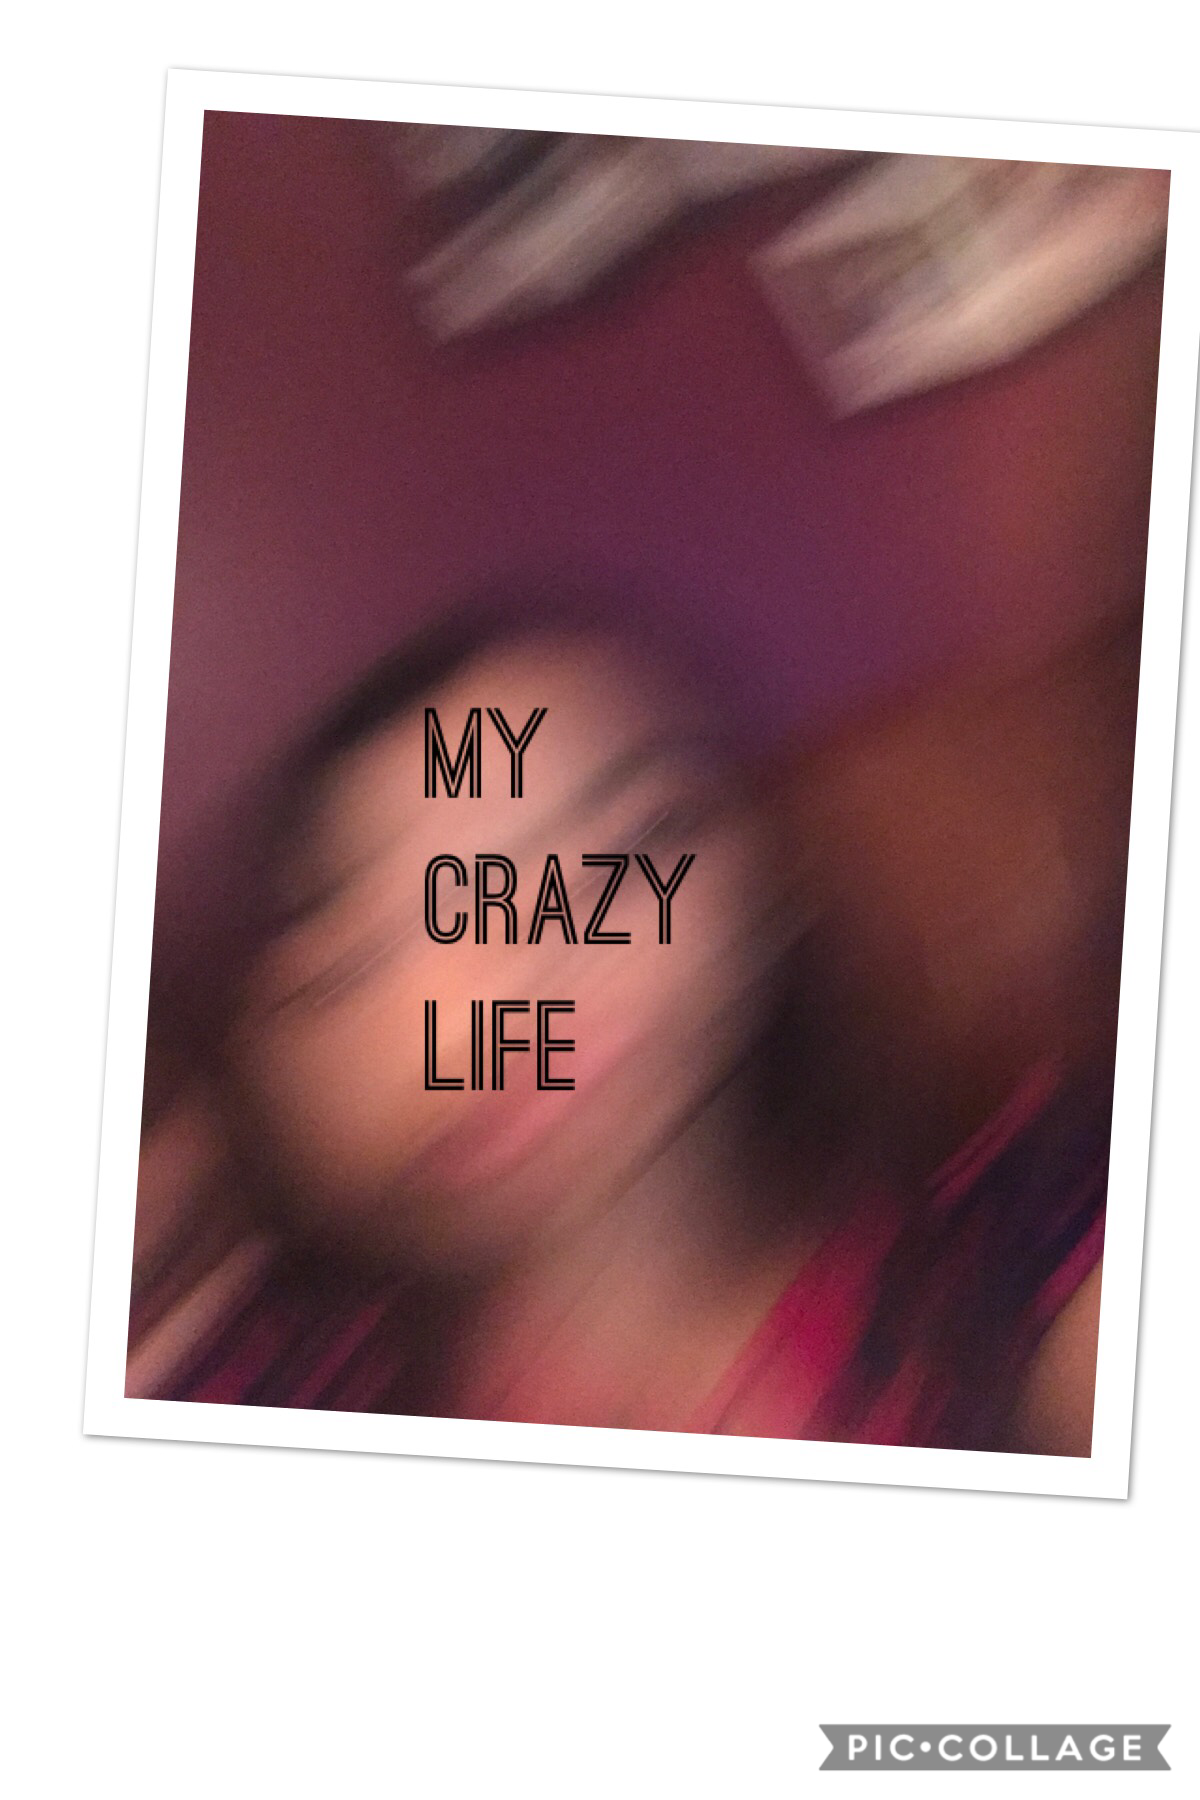 My crazy life ~tap~